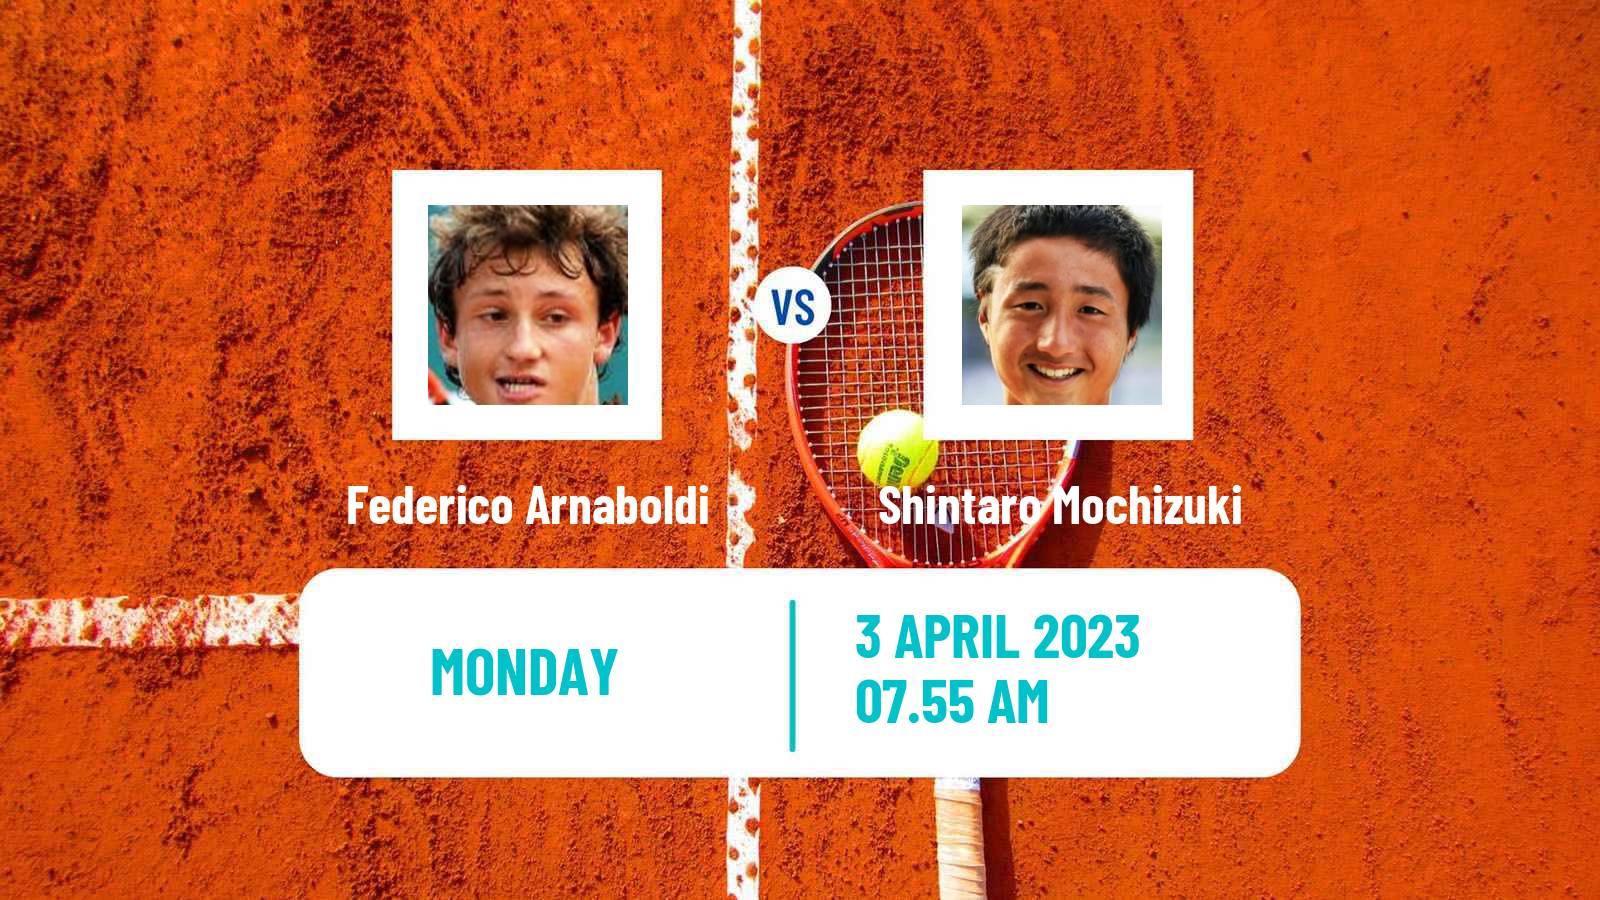 Tennis ATP Challenger Federico Arnaboldi - Shintaro Mochizuki